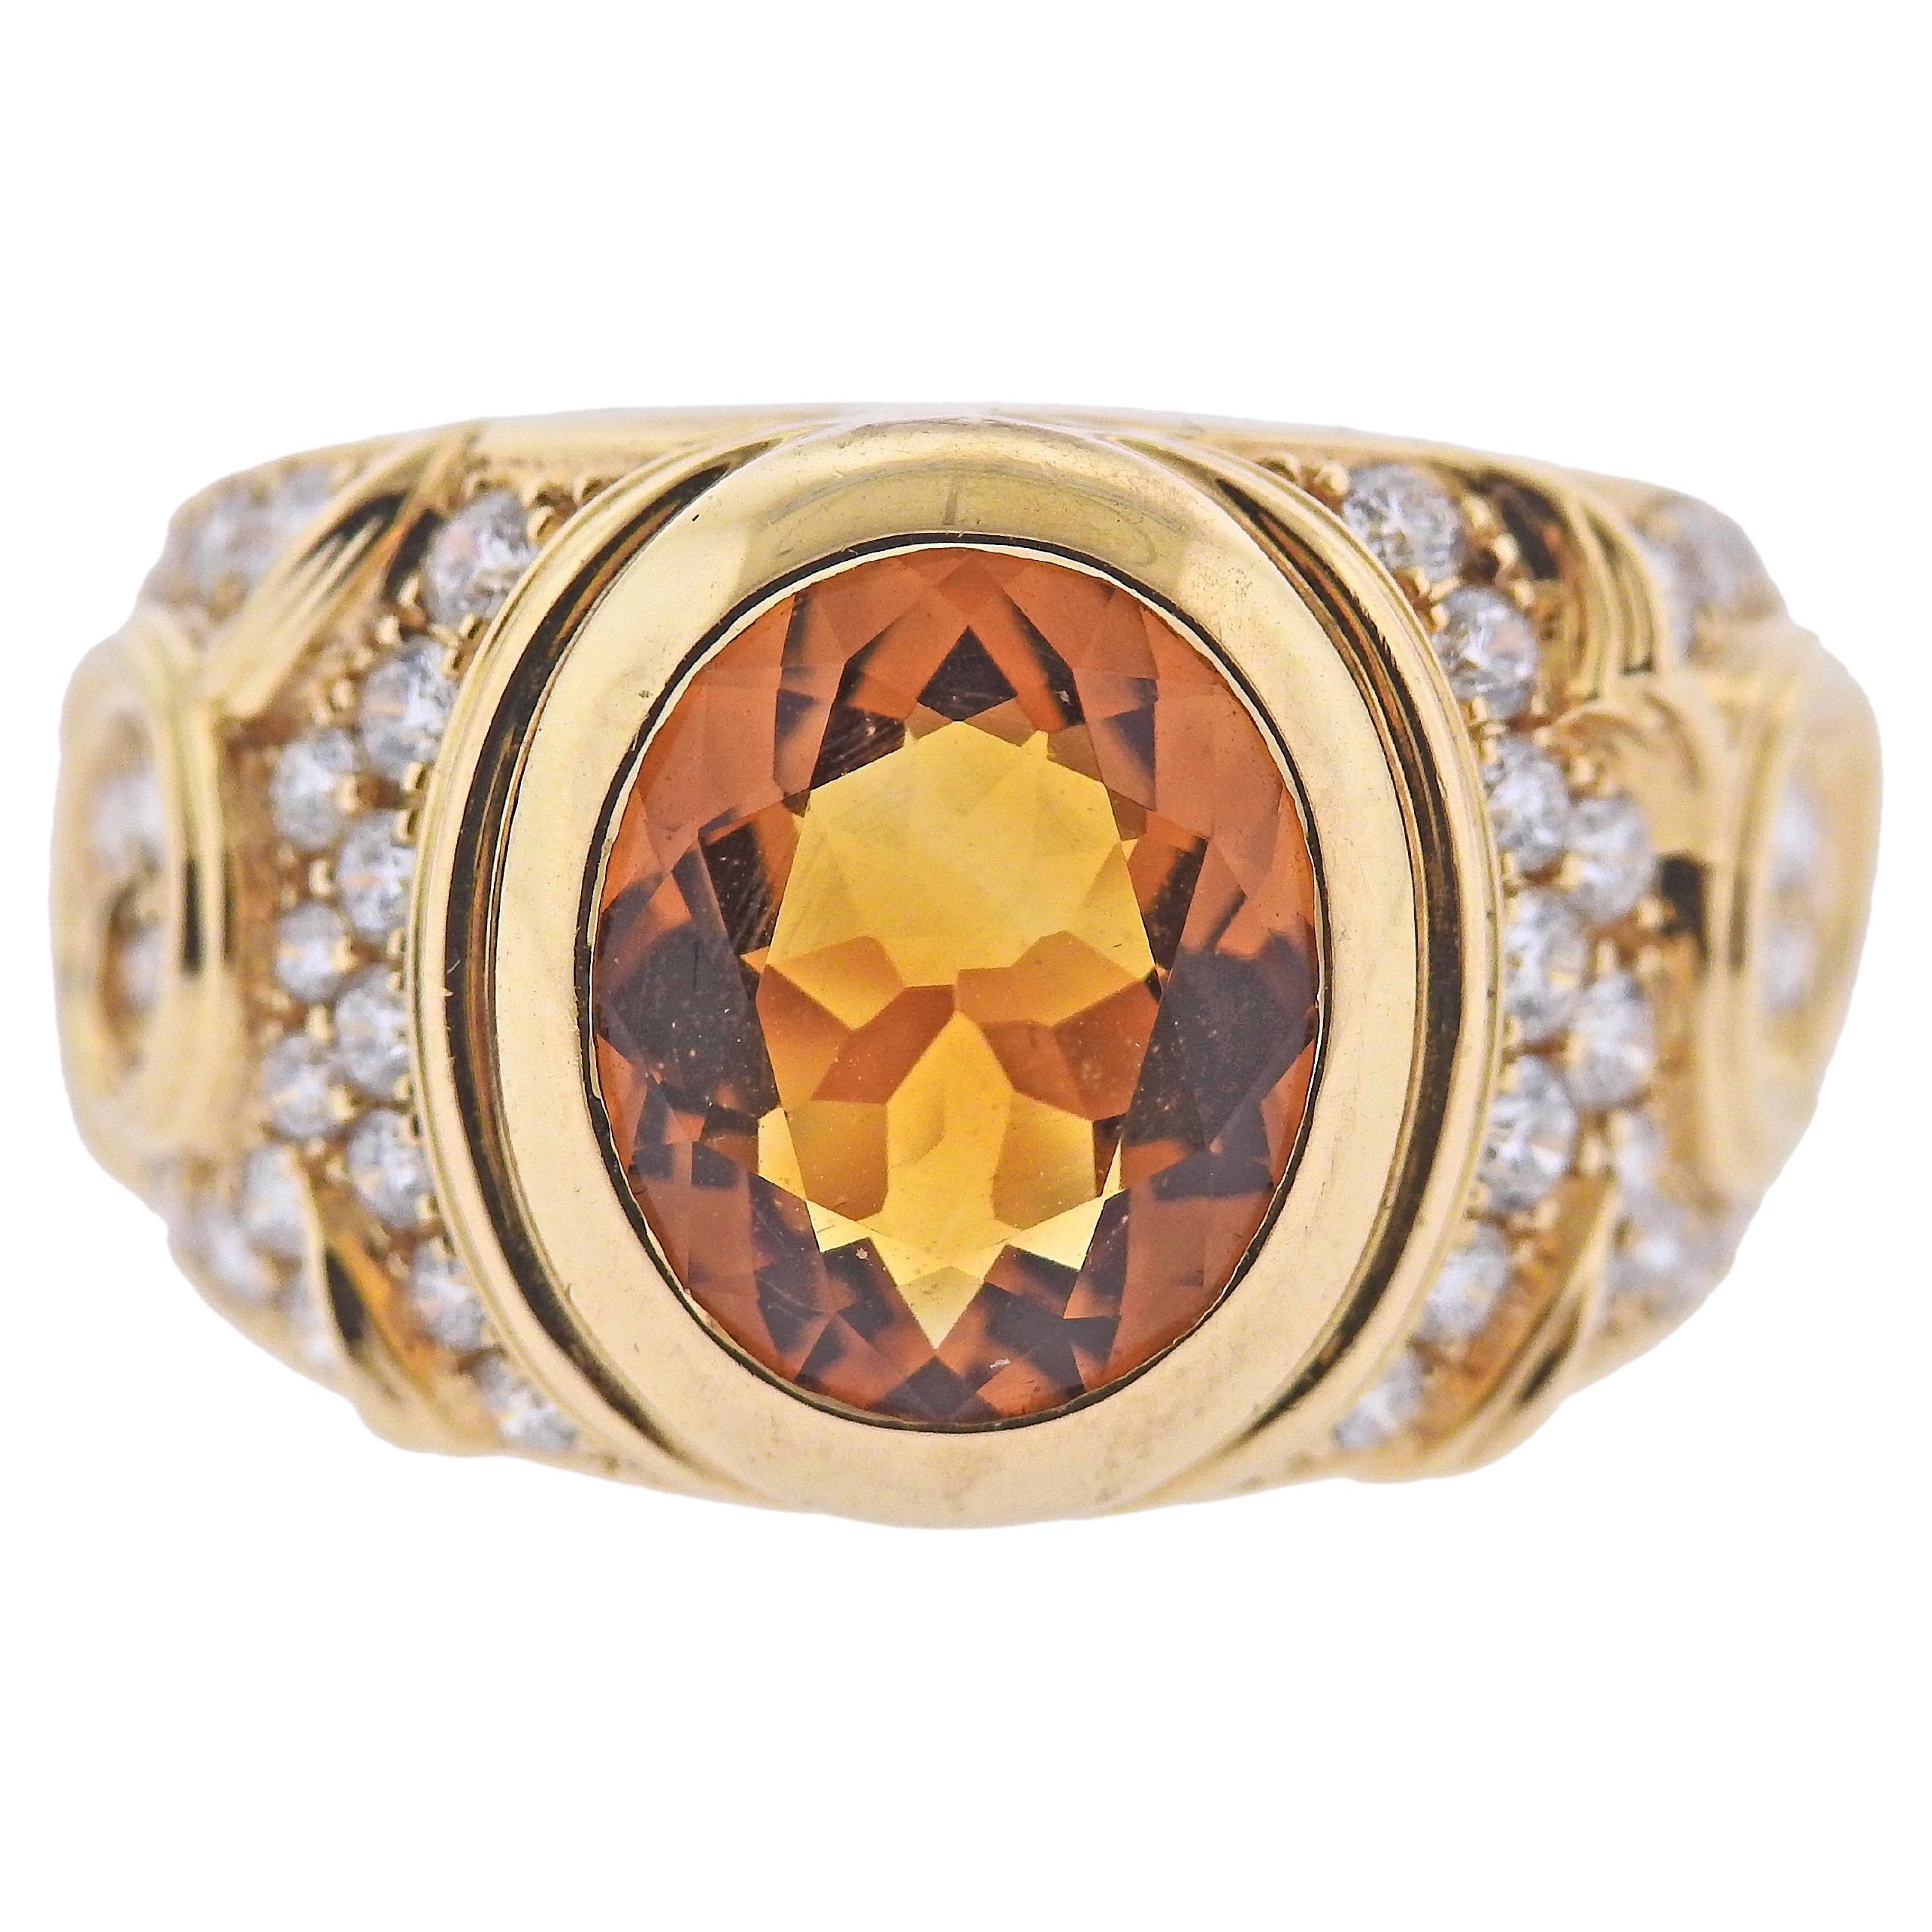 Marina B Citrine Diamond Gold Ring